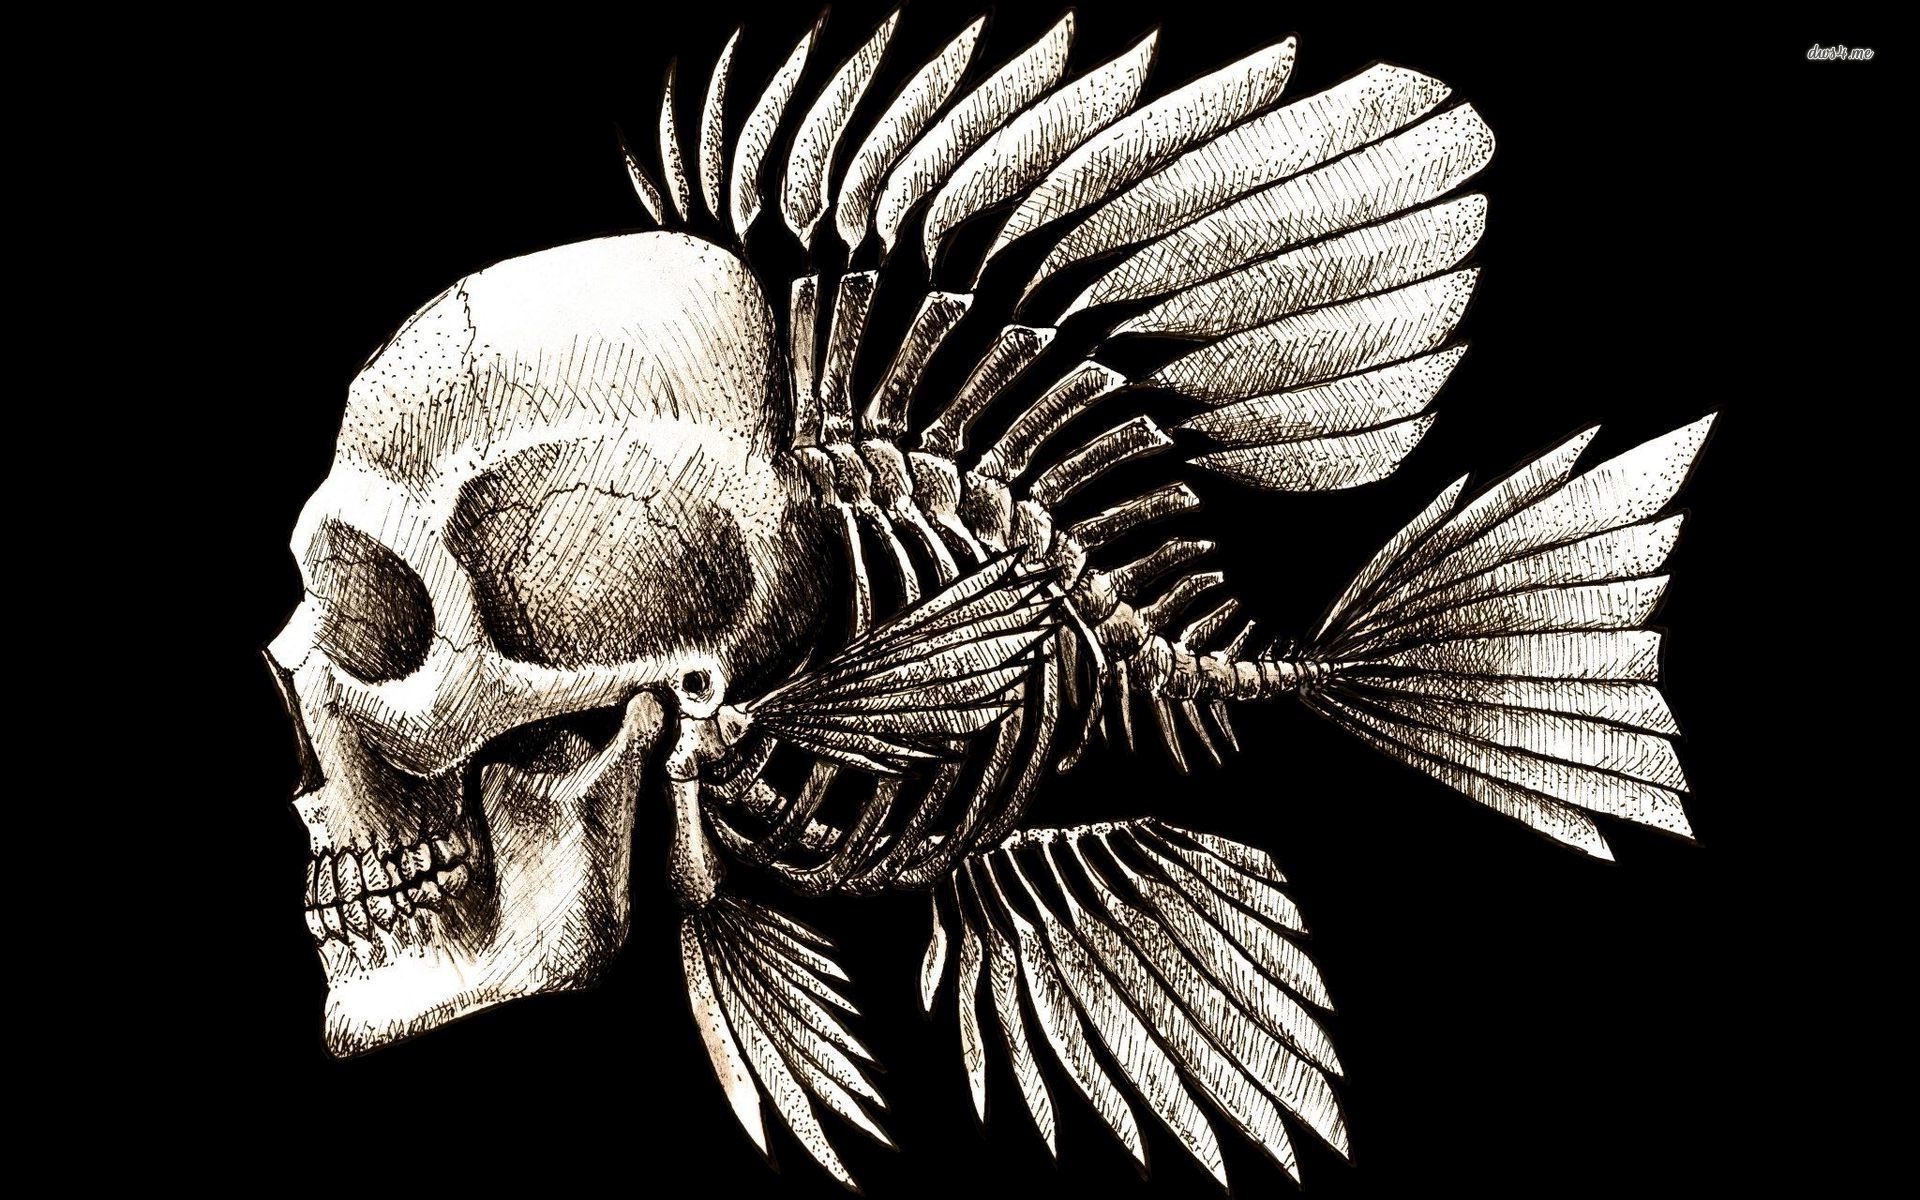 Human Skull With Fish Skeleton Wallpaper Digital Art